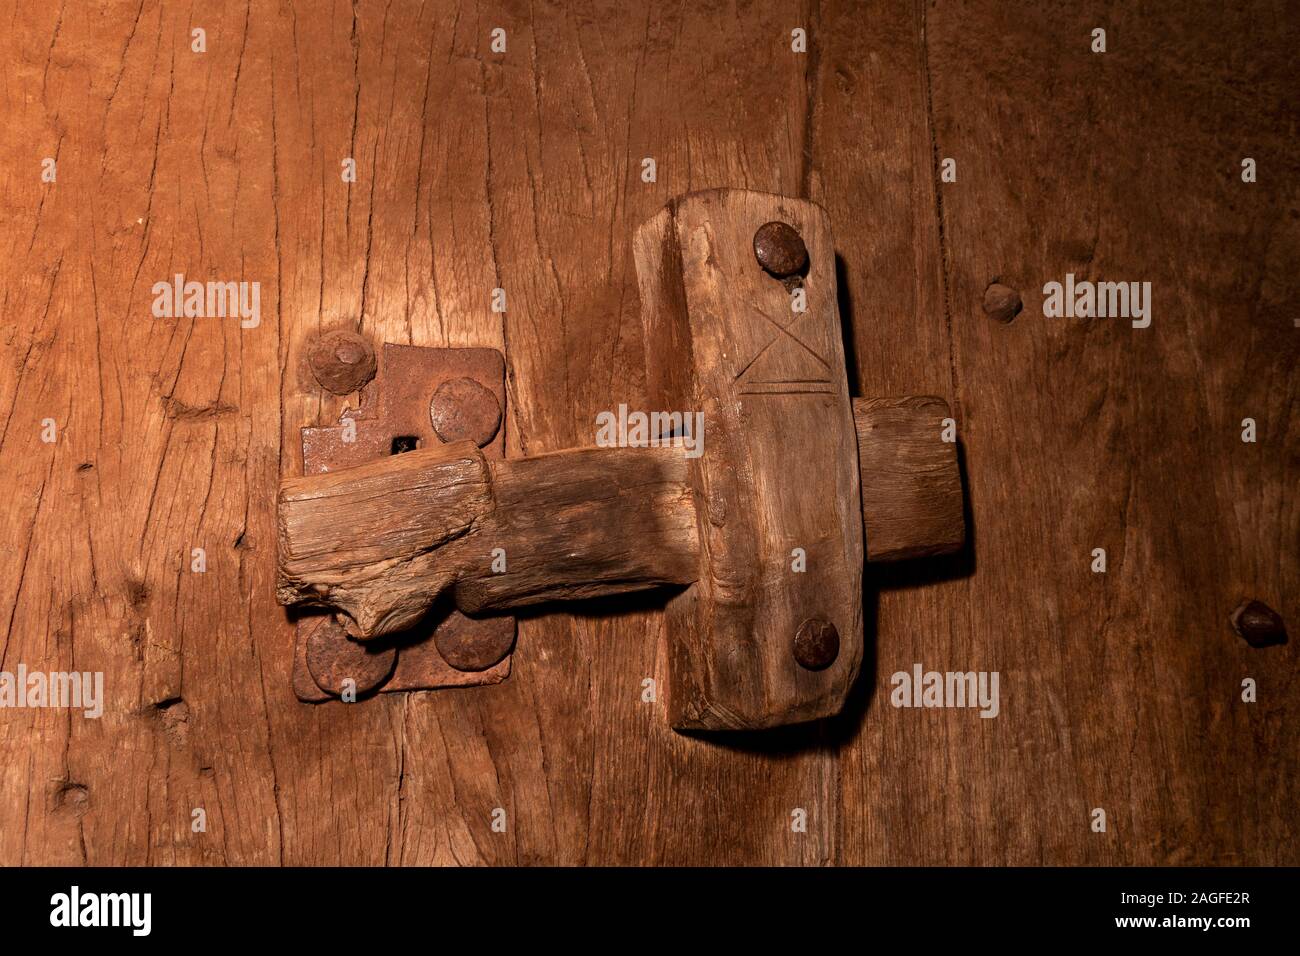 Ethiopia, Amhara Region, Lalibela, Bet Giyorgis, St George’s Lailibela’s only uncovered rock cut church, ancient wooden door lock detail Stock Photo